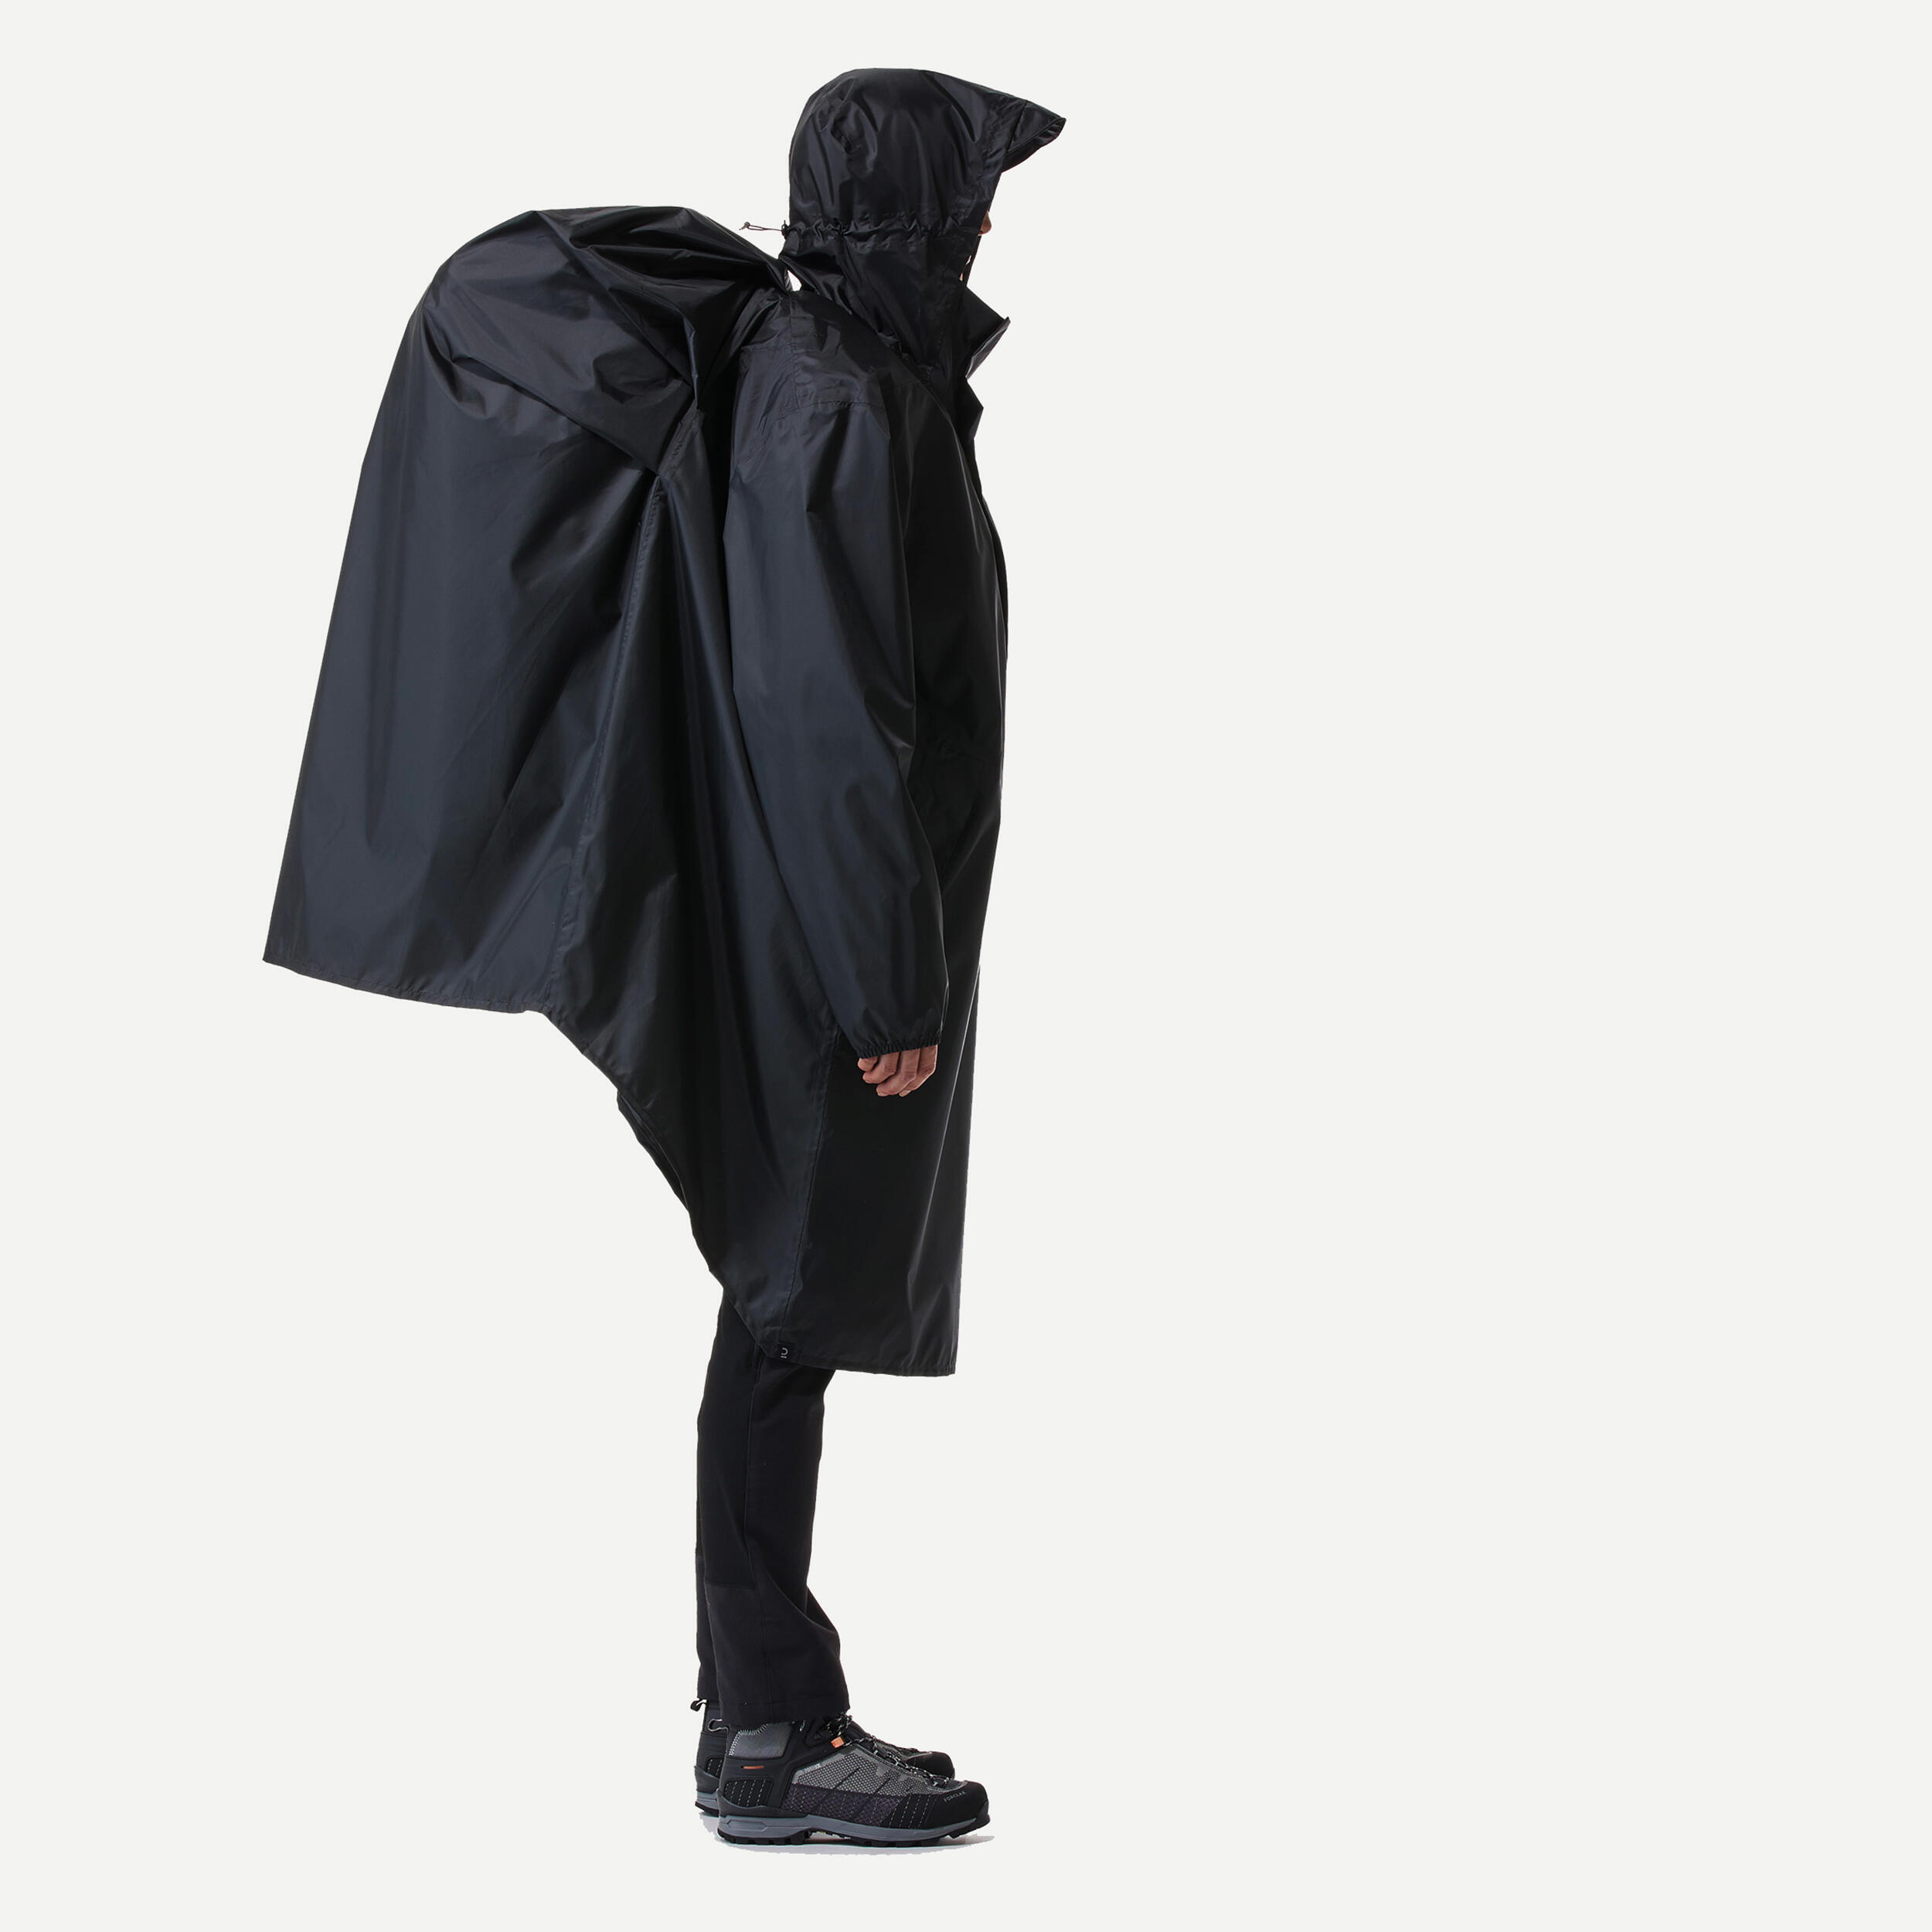 Hiking rain poncho - MT500  - 60L - Black 1/5